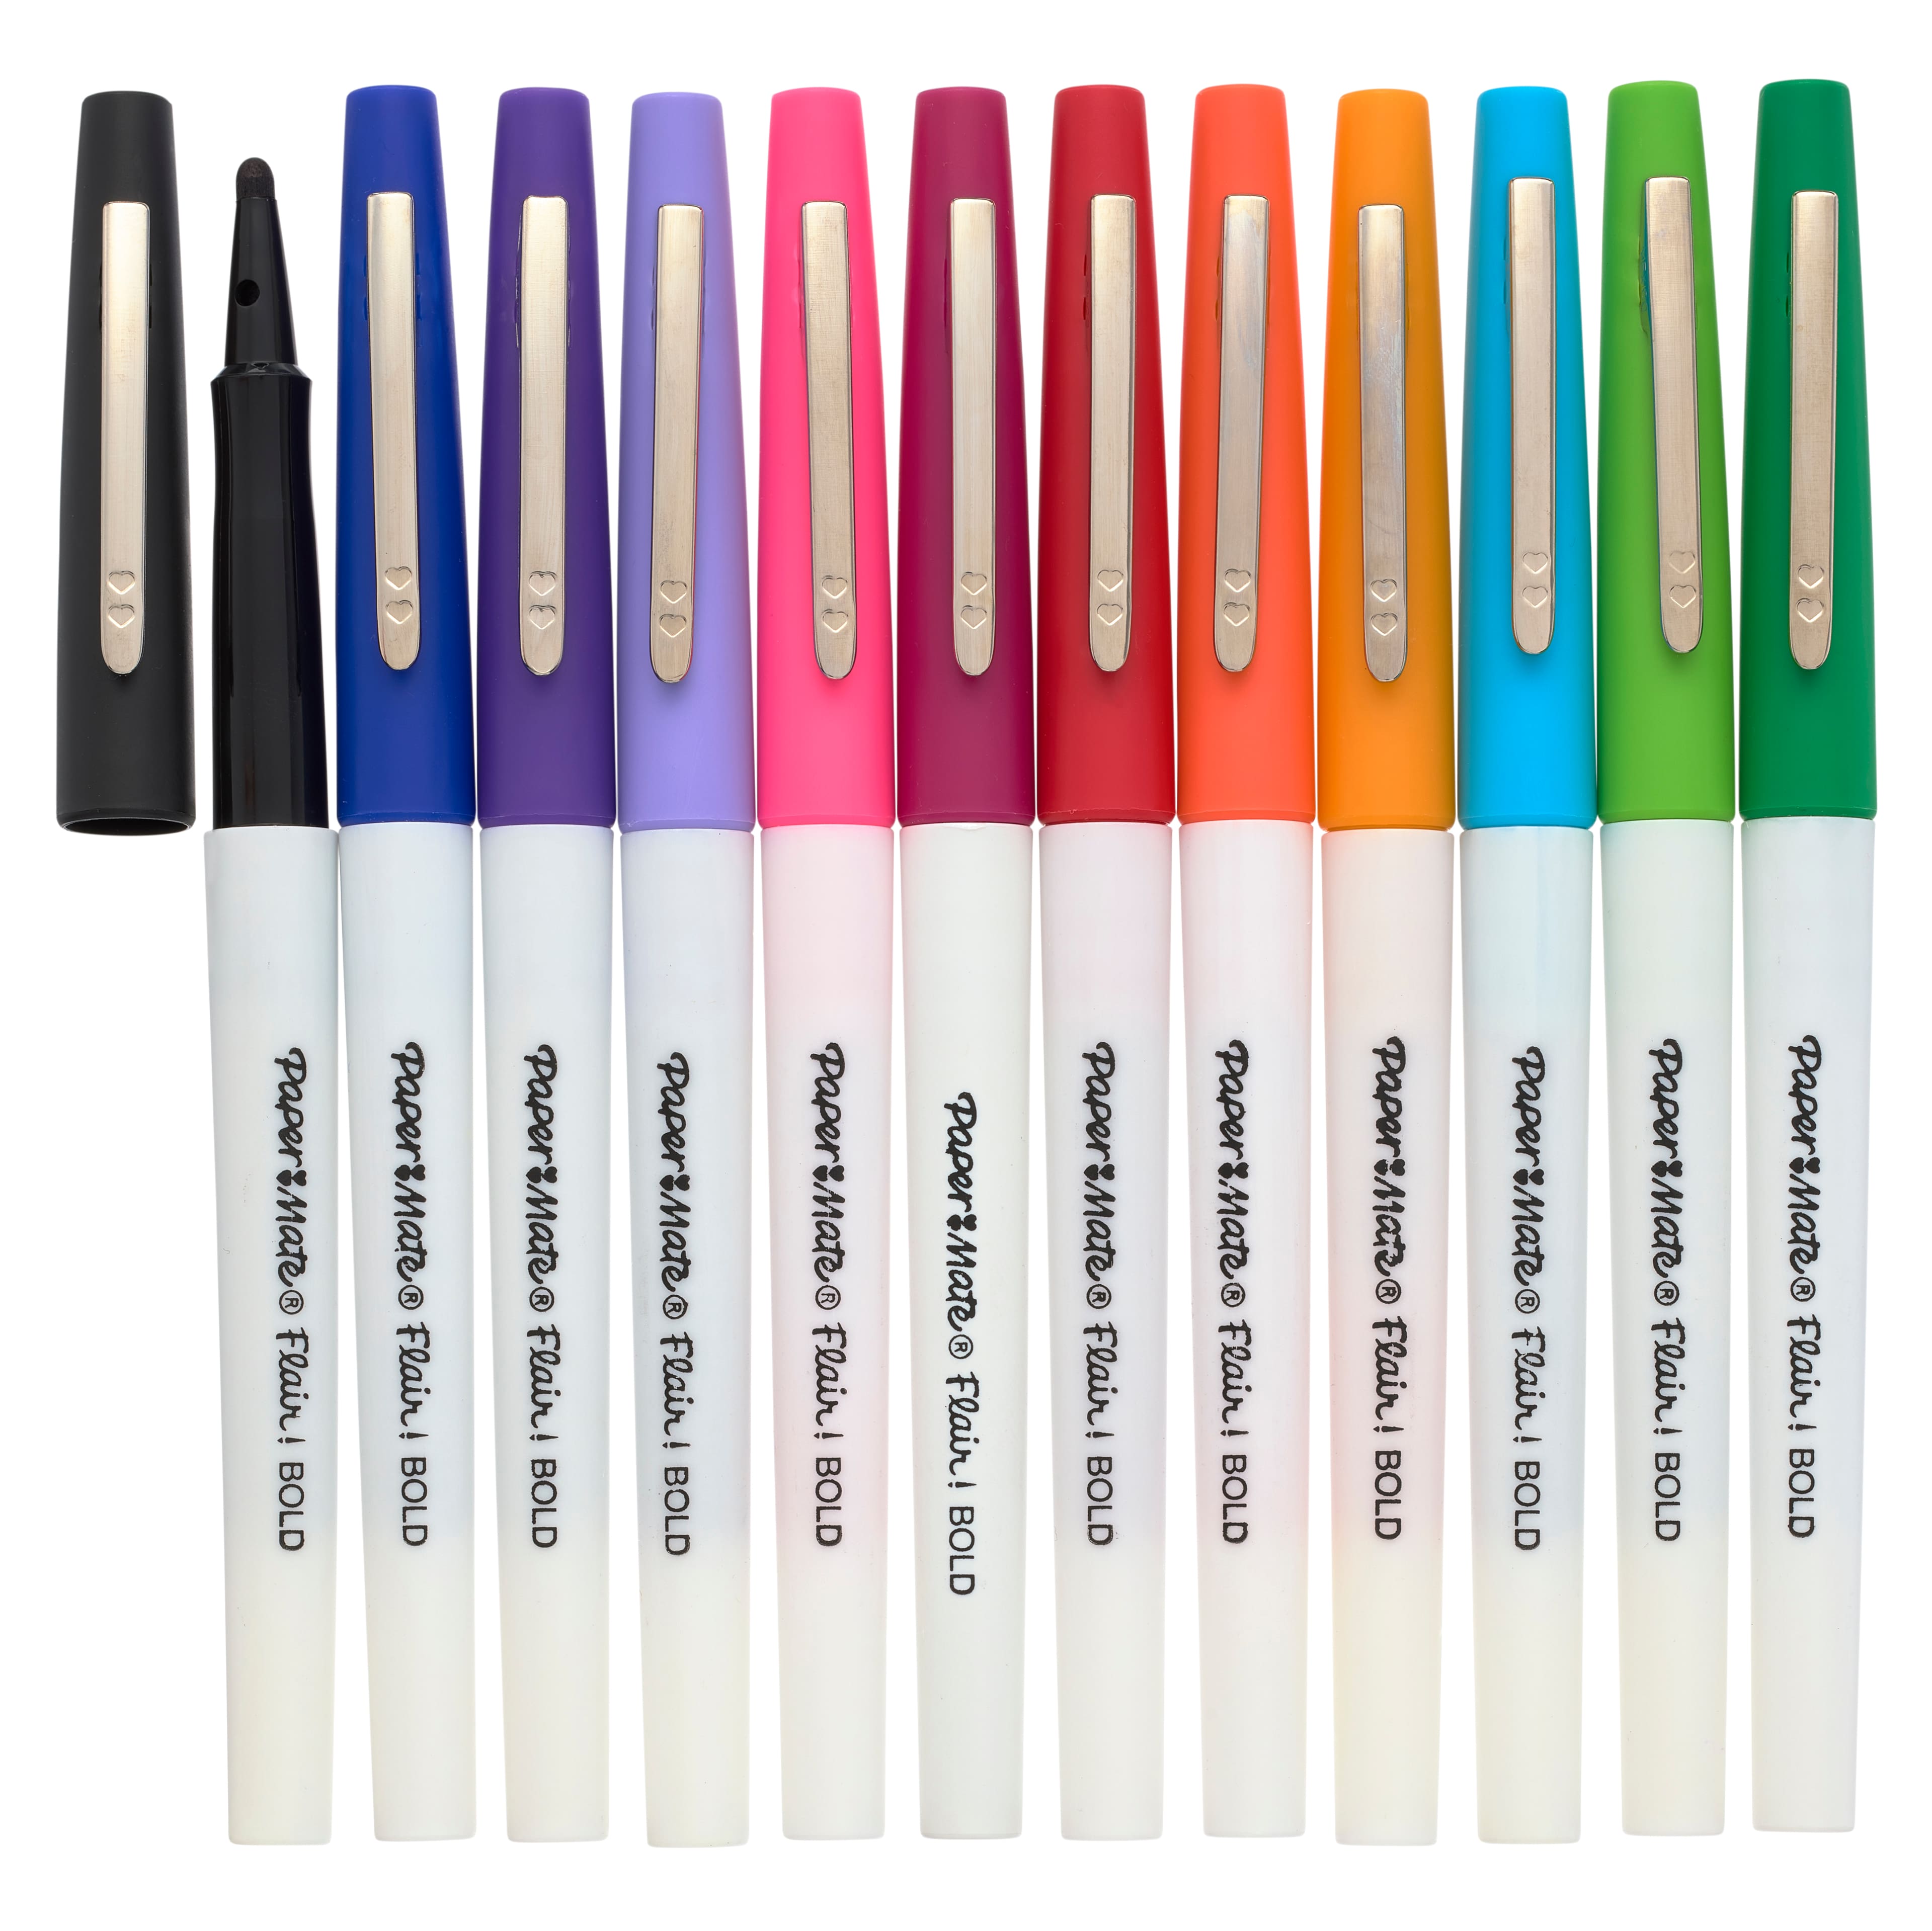 Paper Mate® Flair® Felt Tip Pen 12 Color Set